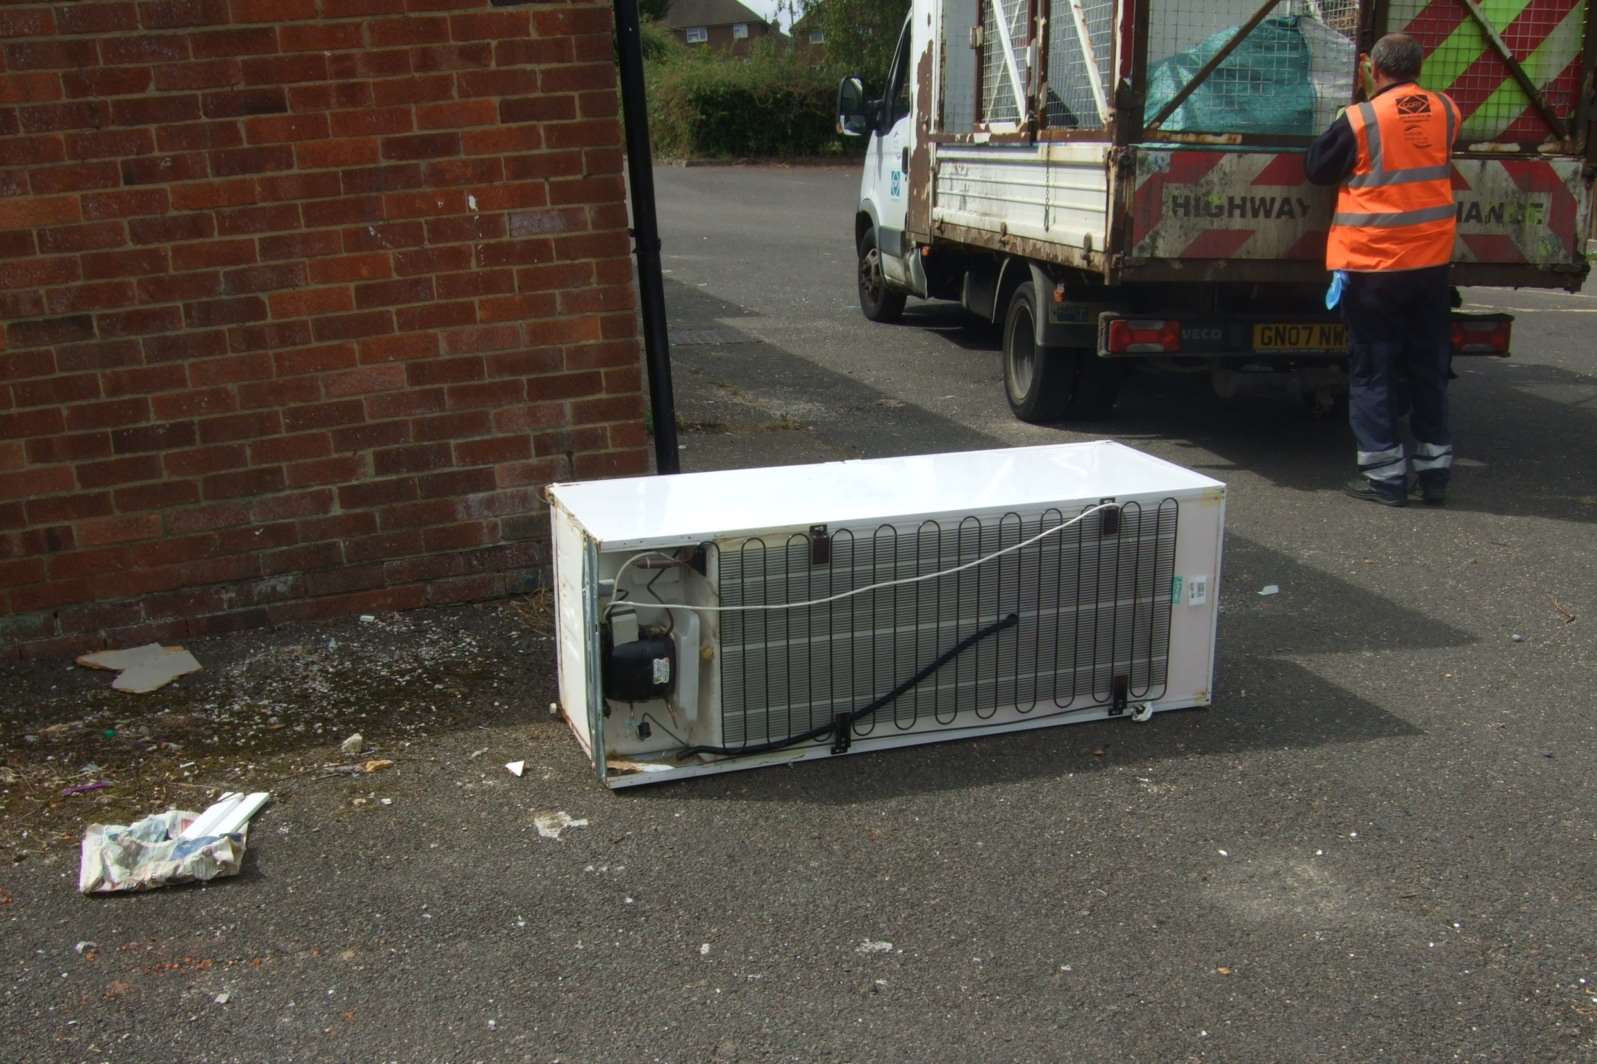 The Tunbridge Wells Council street cleaning team find a fridge that has been dumped on a street corner during their litter-blitz